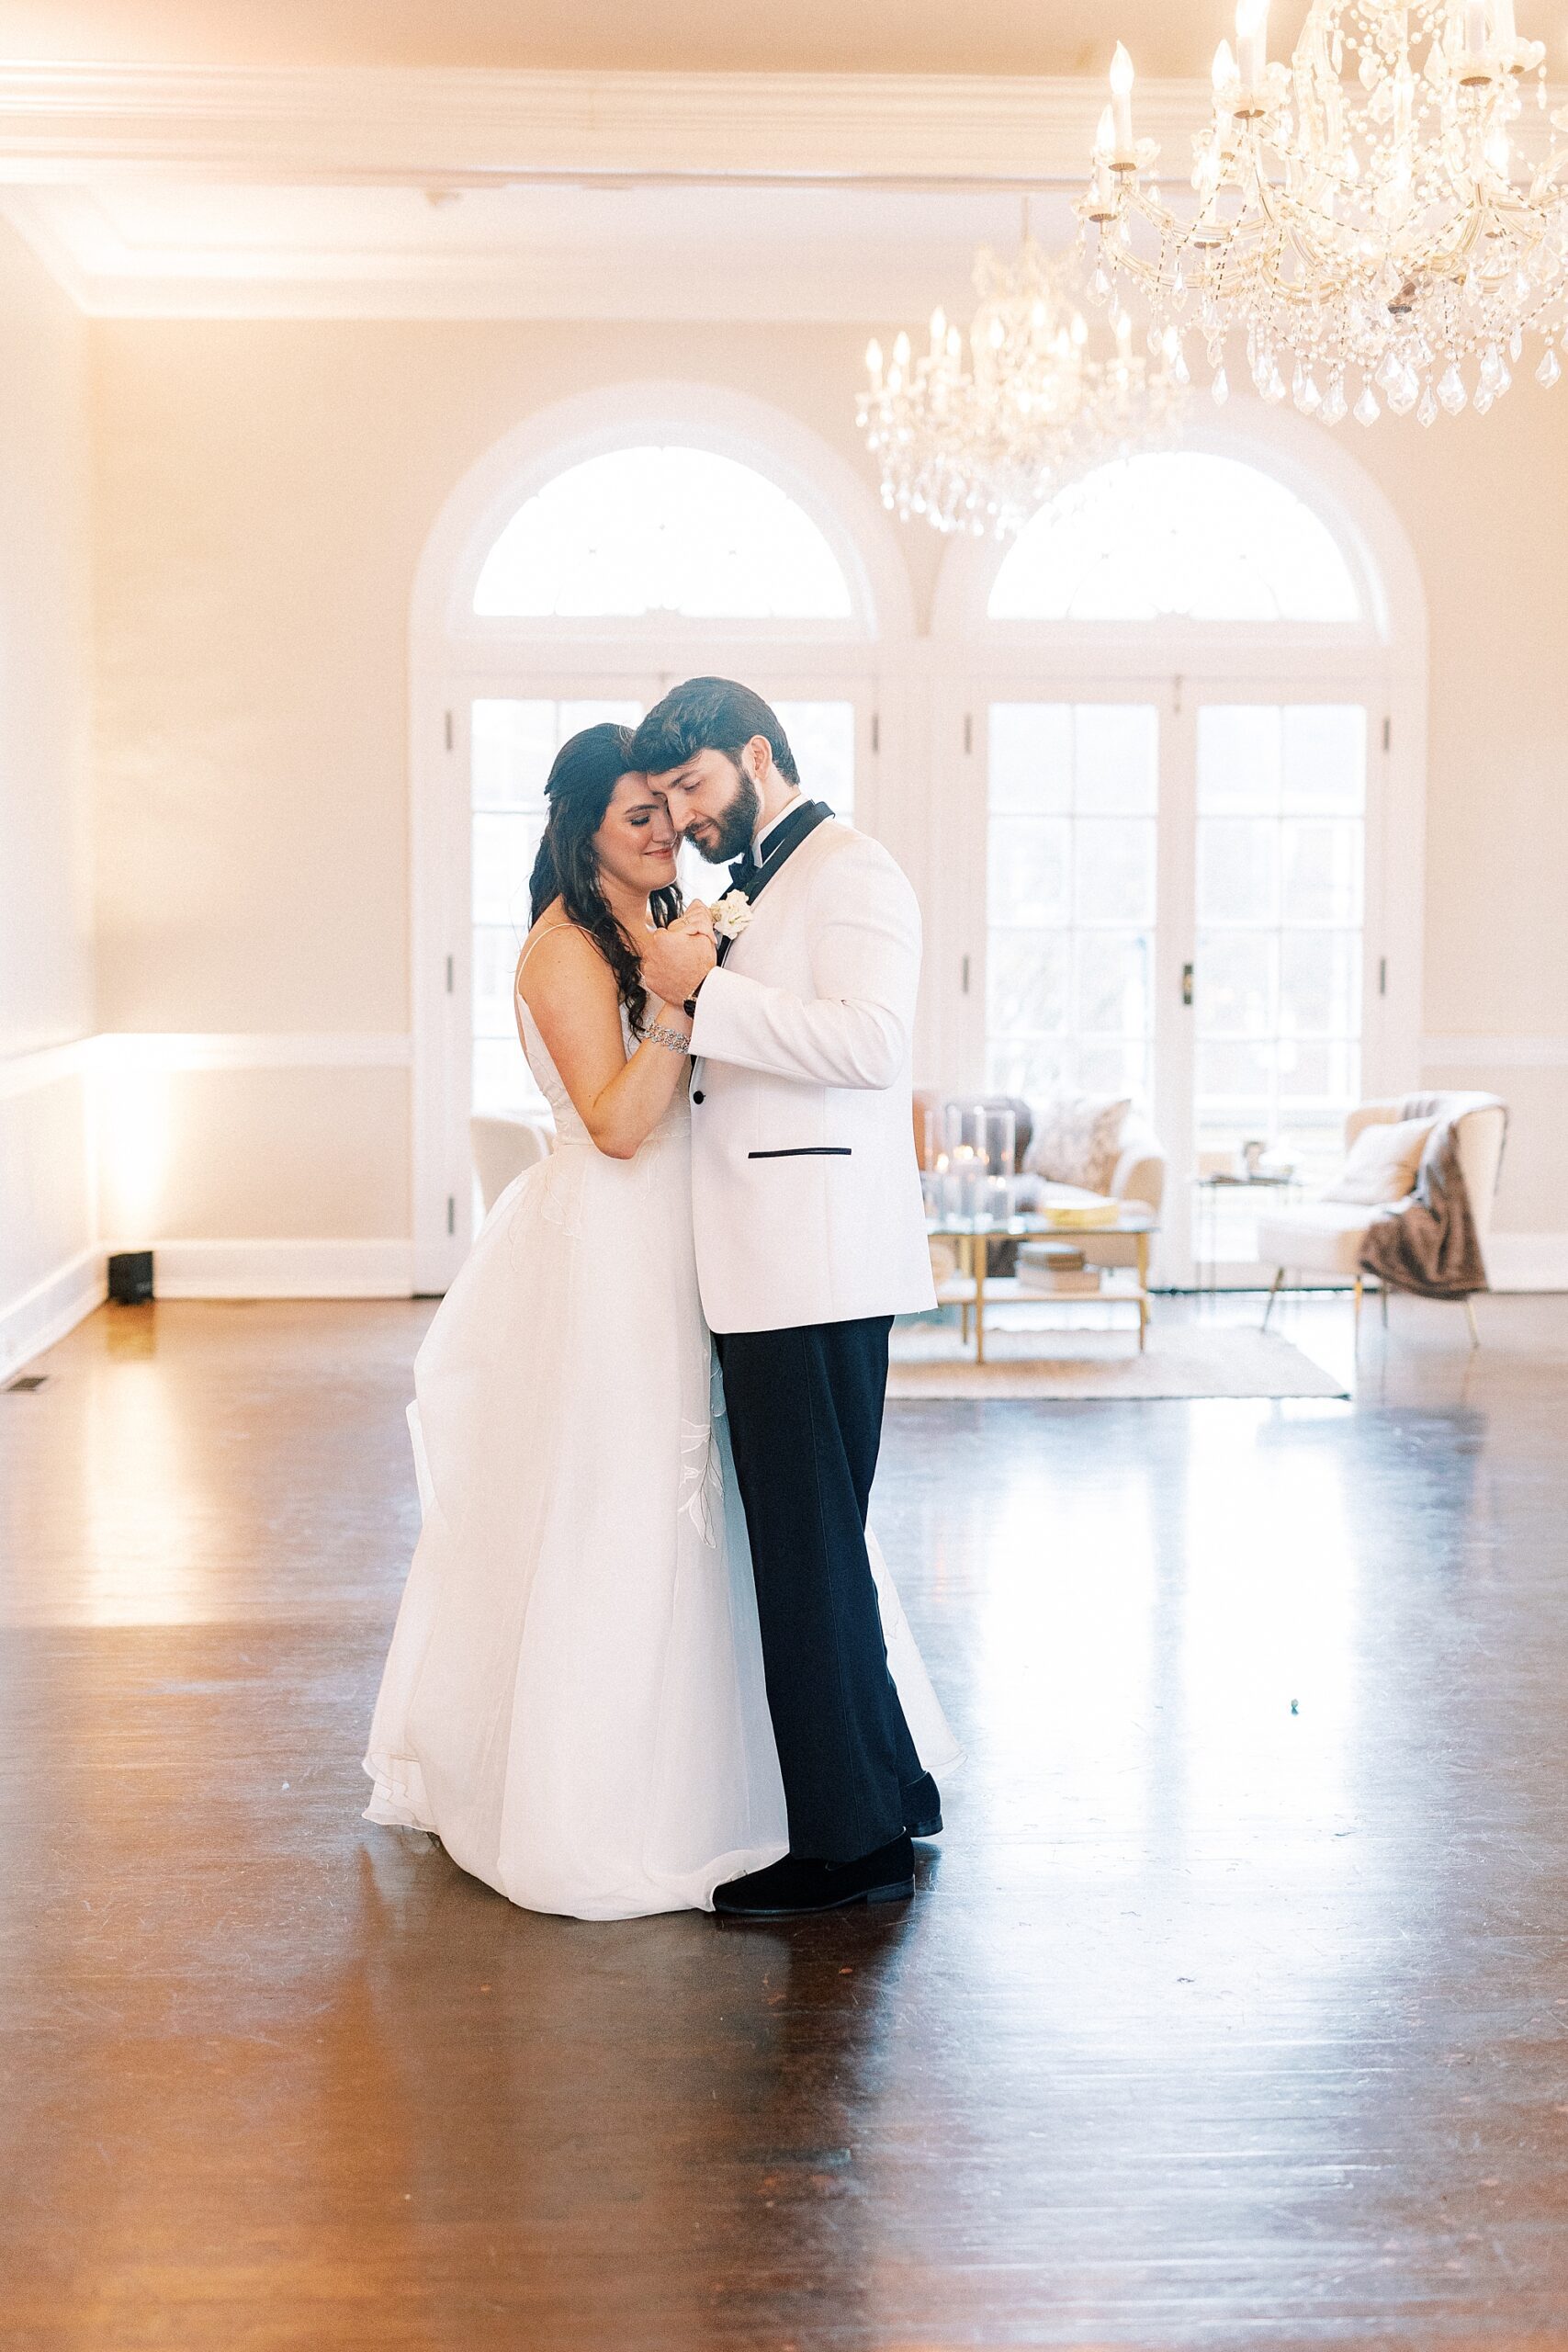 newlyweds hug close on dance floor during wedding reception 